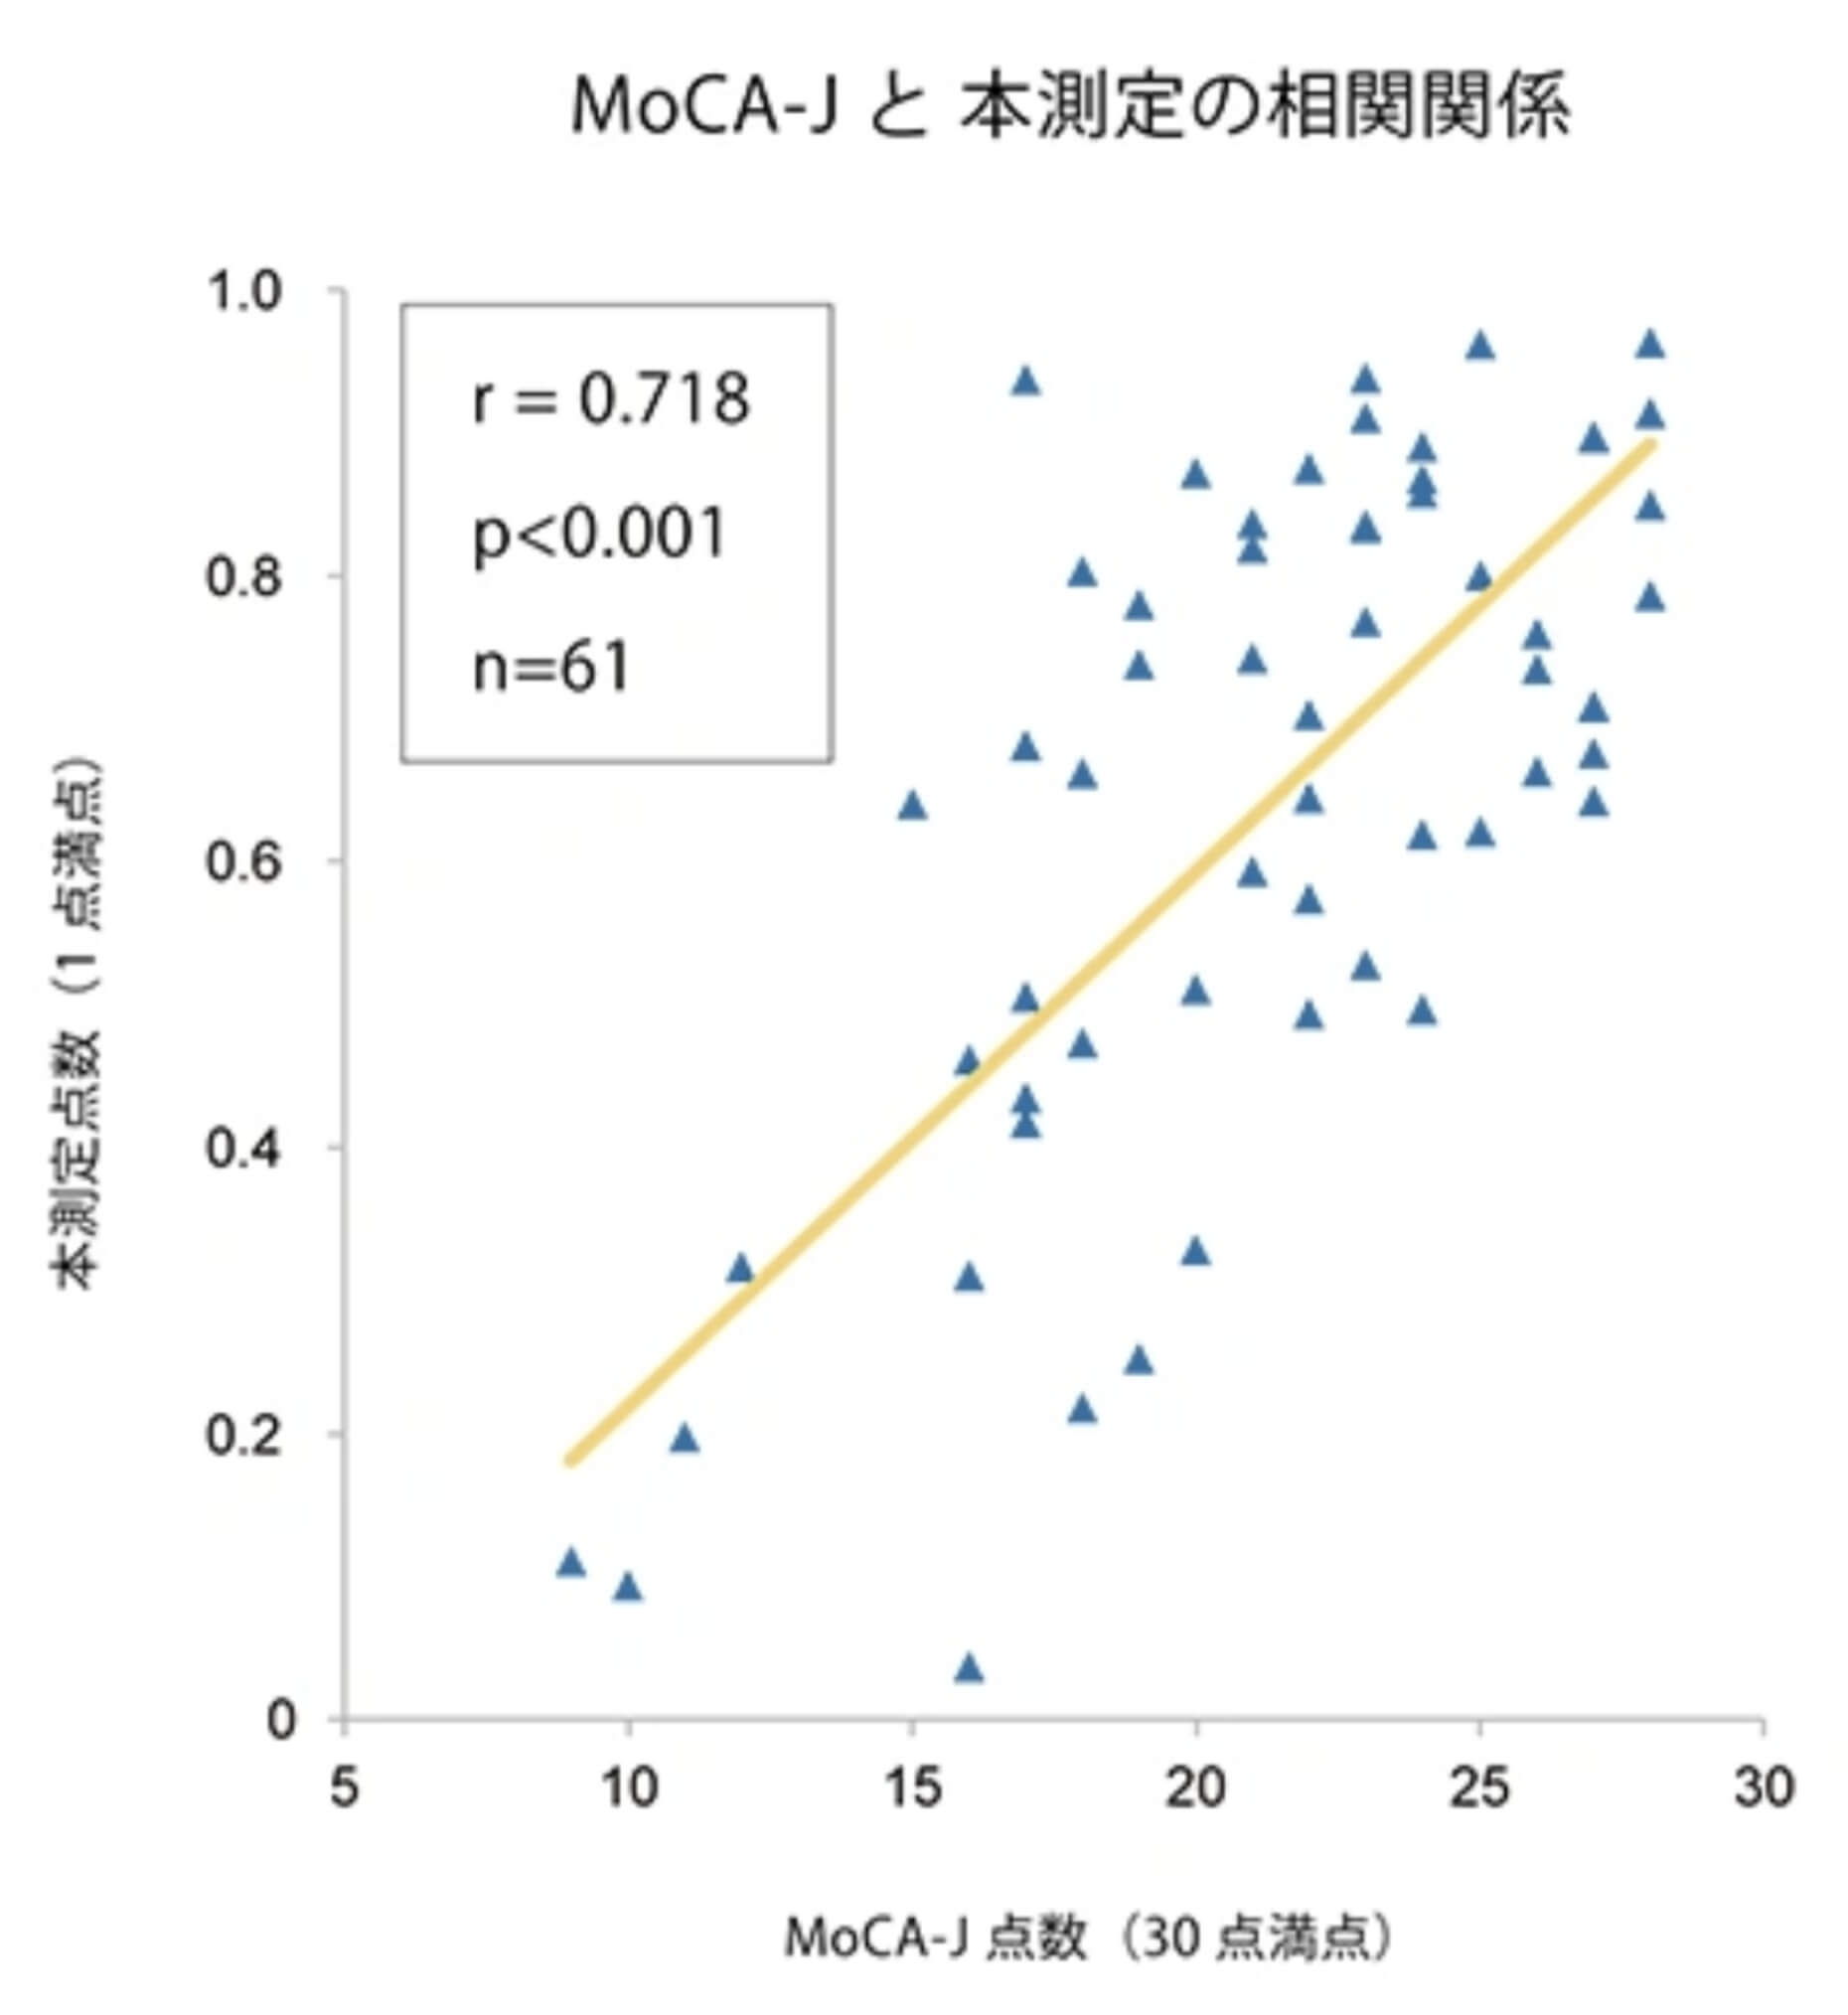 MoCA-Jと本測定の相関関係